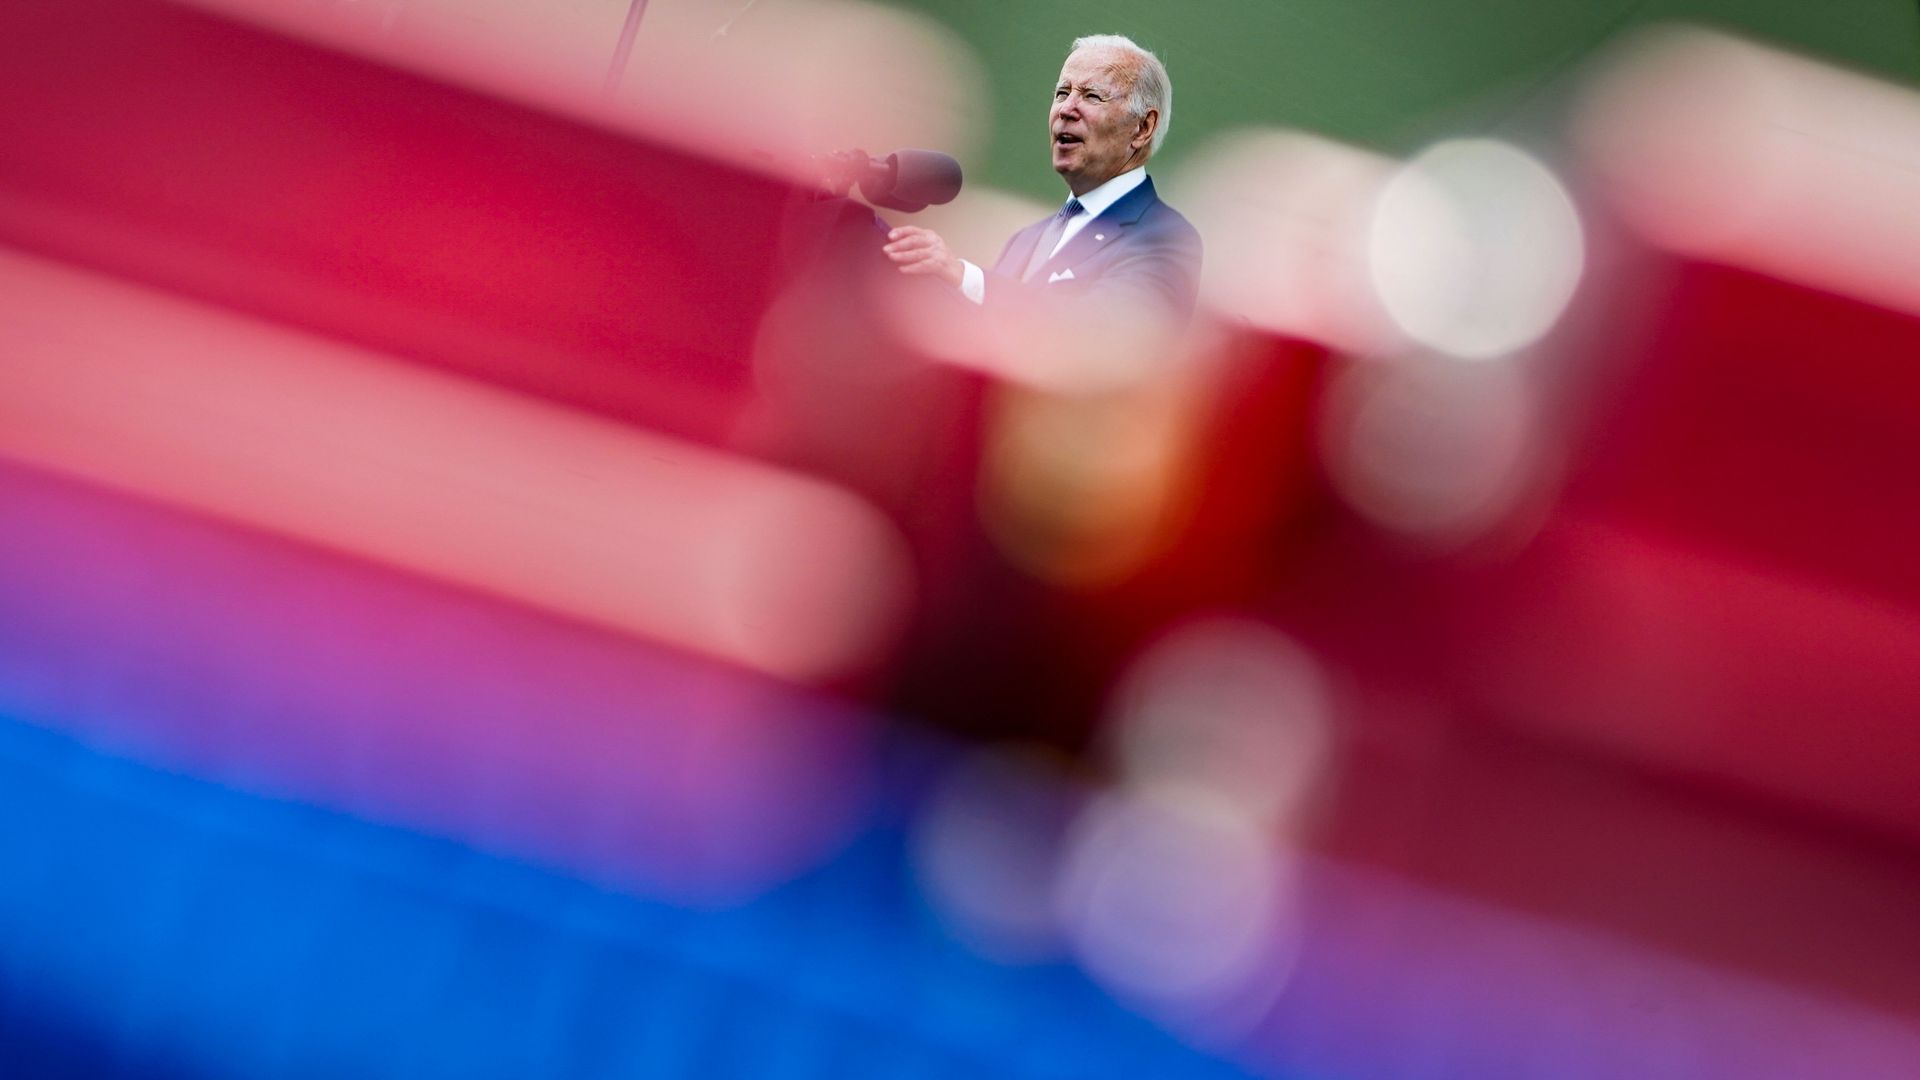 President Biden is seen delivering a speech on Sunday.